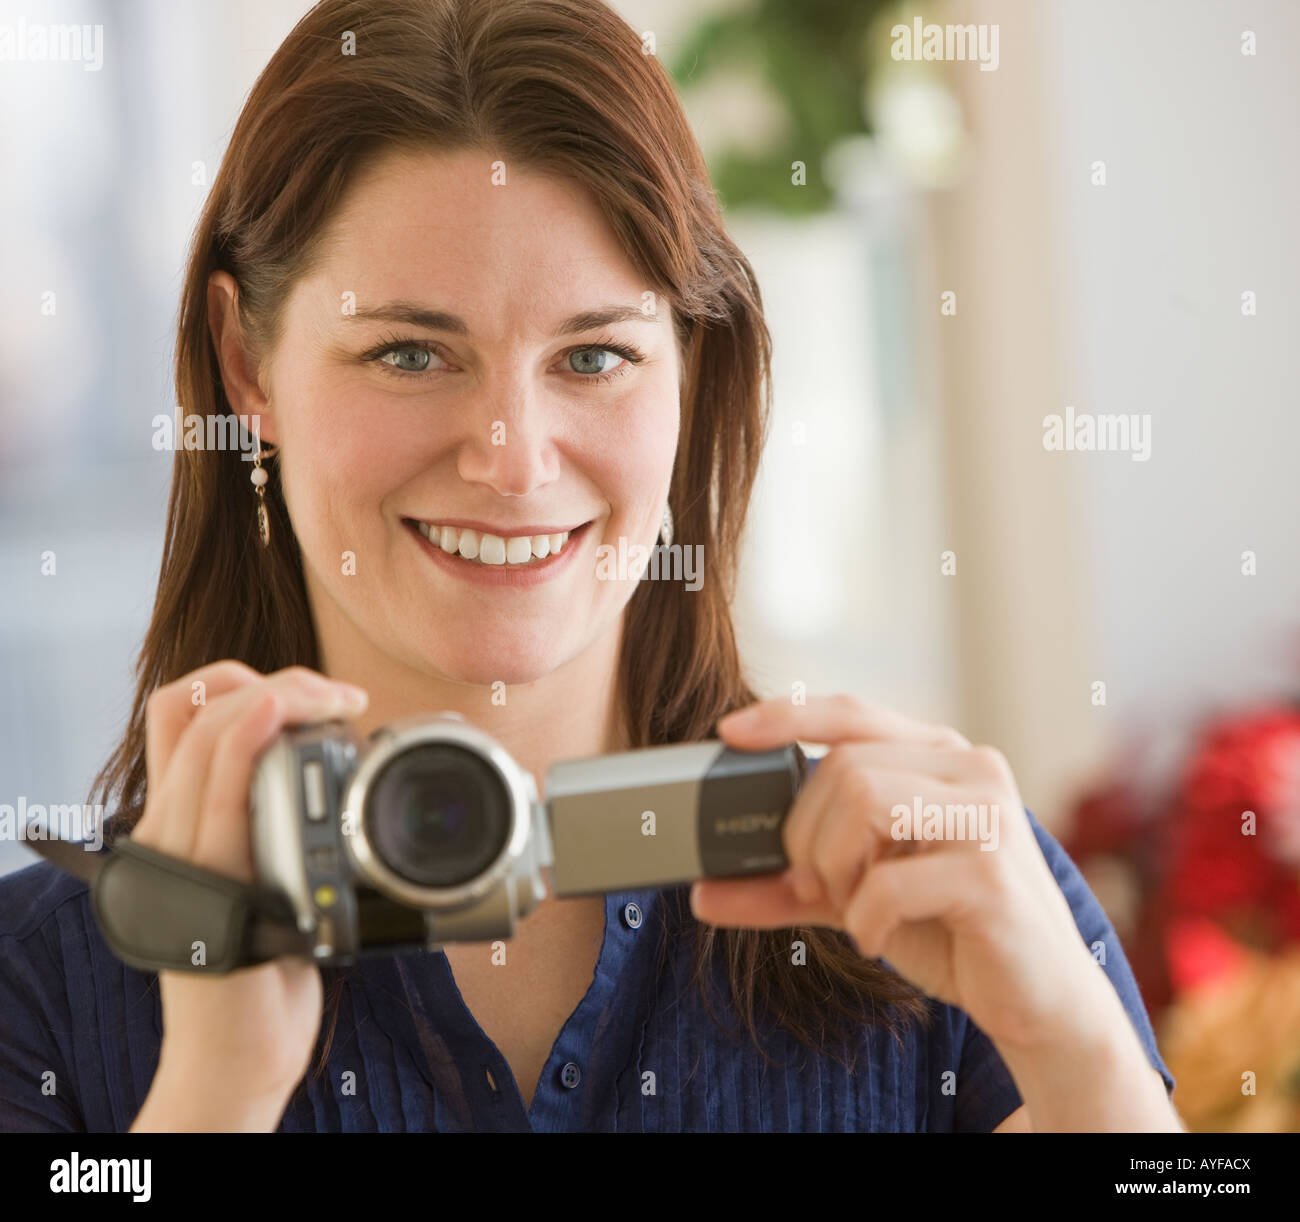 Woman holding video camera Stock Photo - Alamy